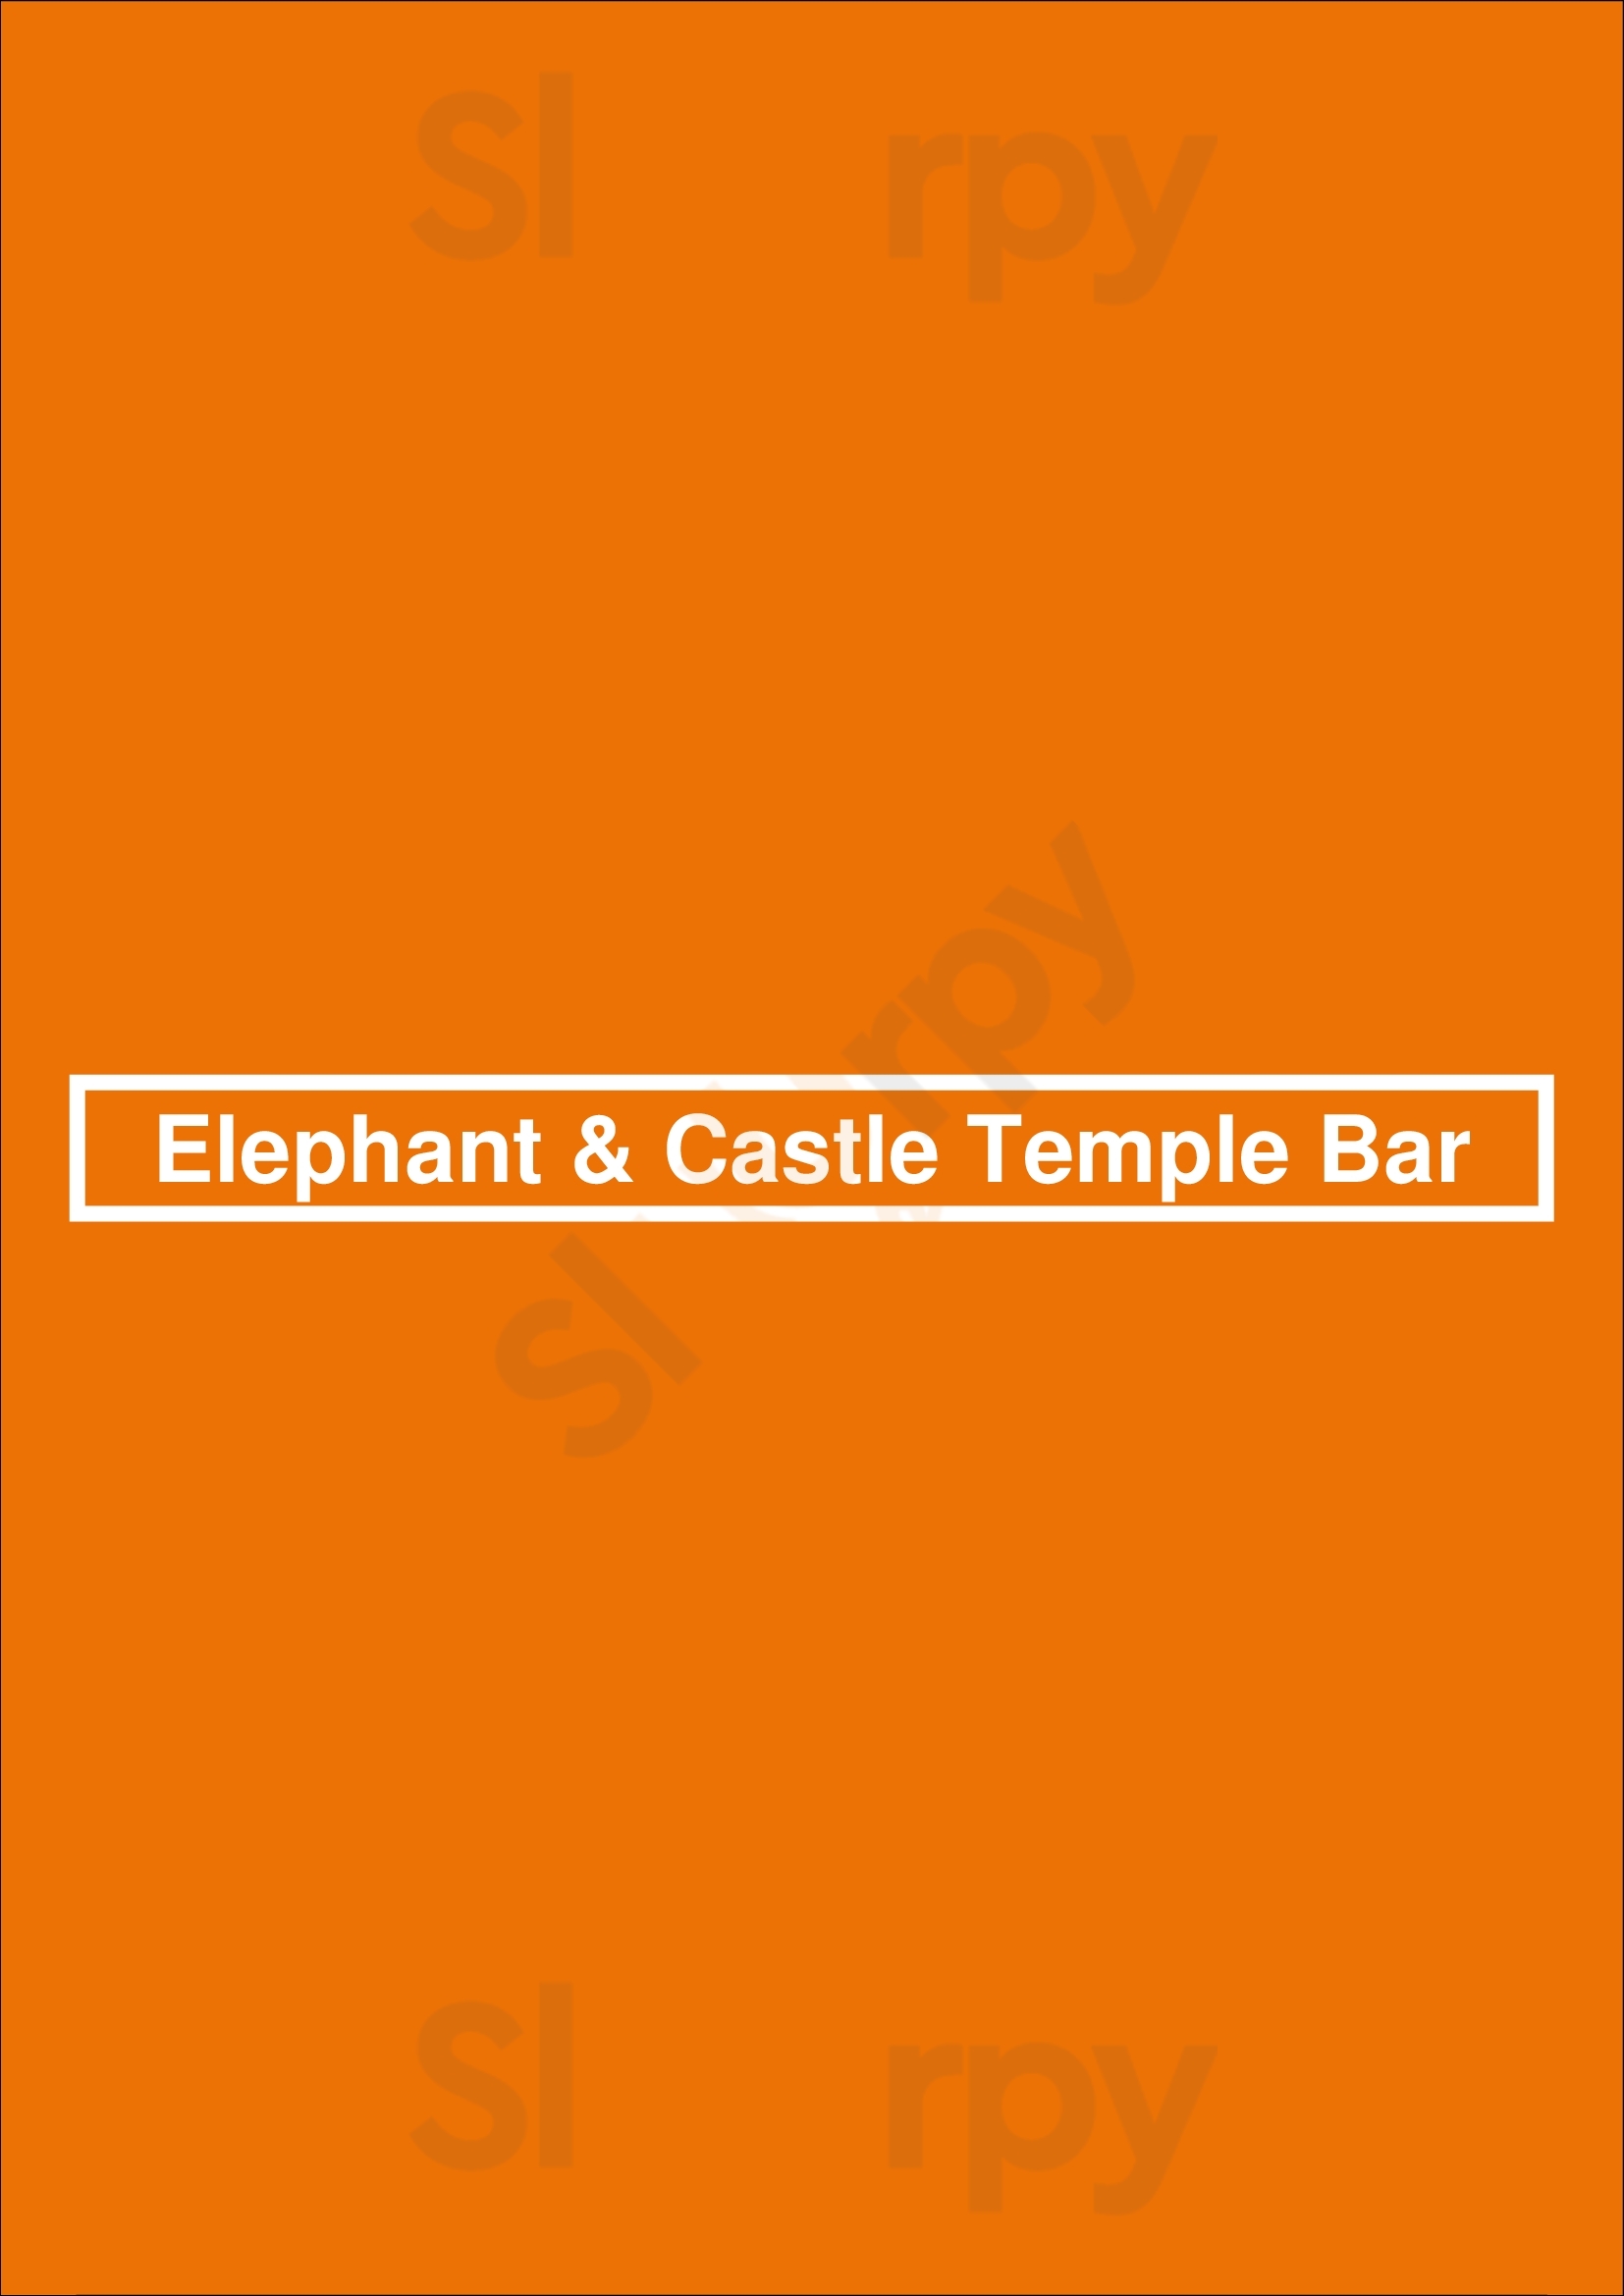 Elephant & Castle Temple Bar Dublin Menu - 1